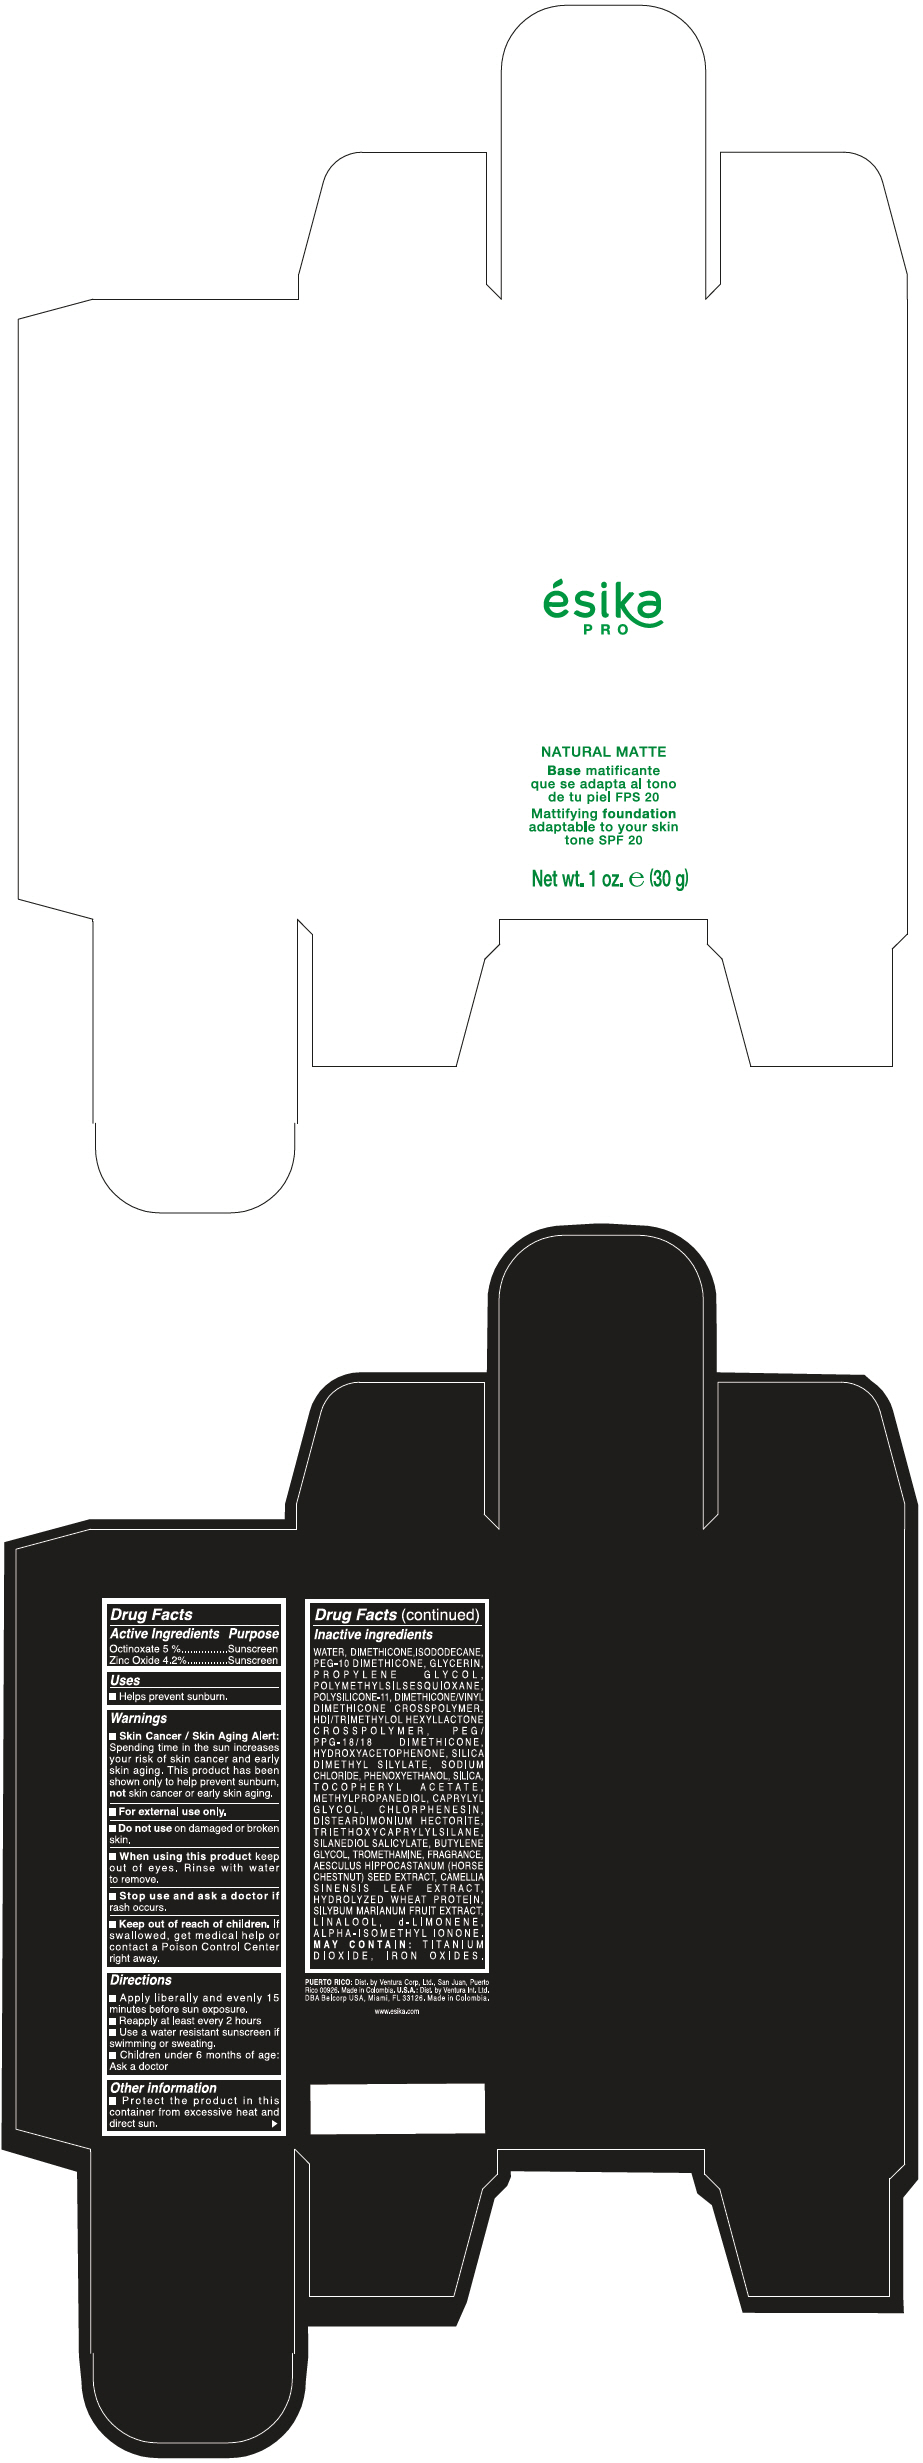 PRINCIPAL DISPLAY PANEL - 30 g Bottle Box - Medio4/Beige